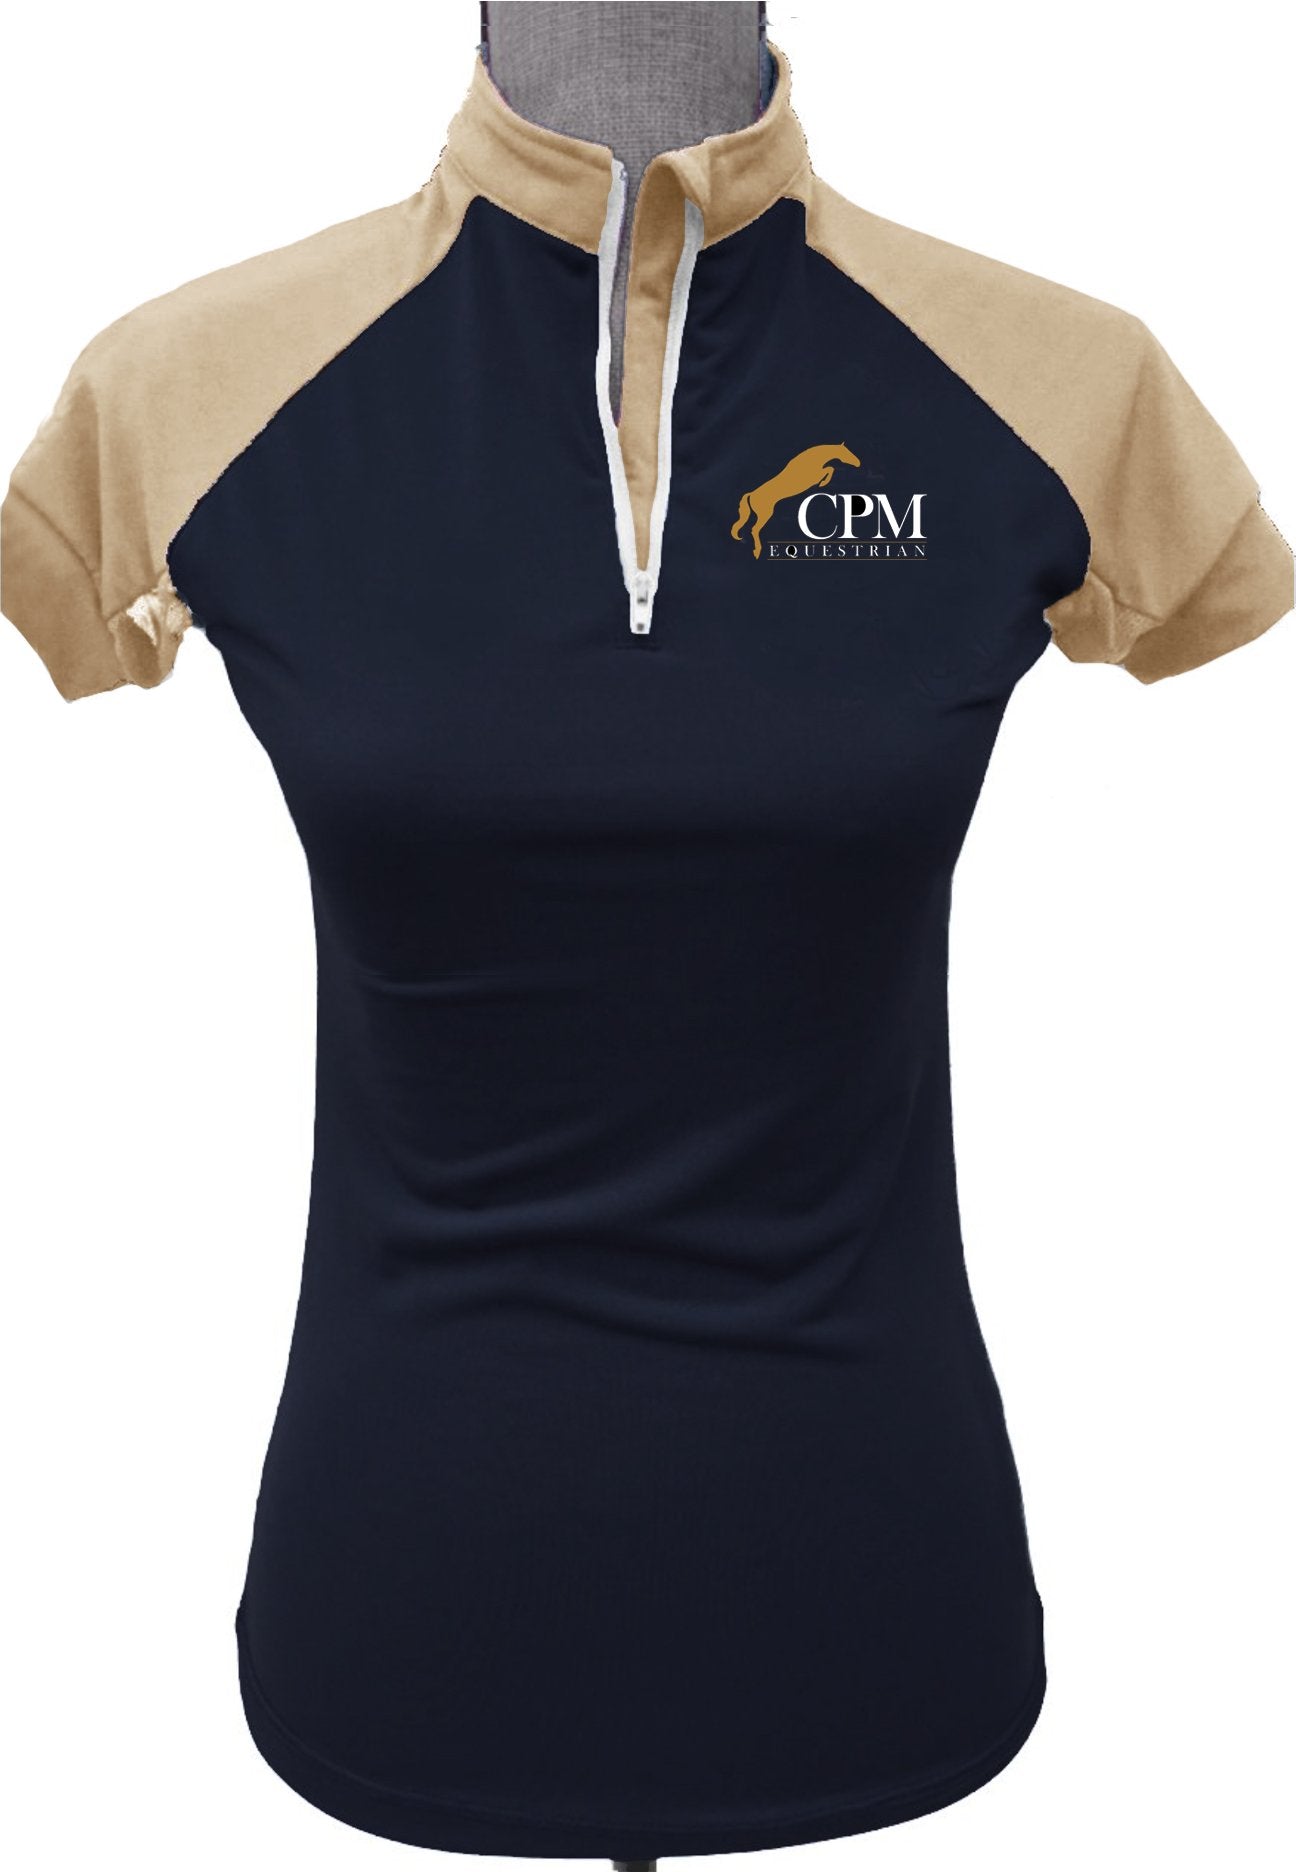 CPM Equestrian Short Sleeve Custom Sun Shirt - Black    Adult + Youth Sizes